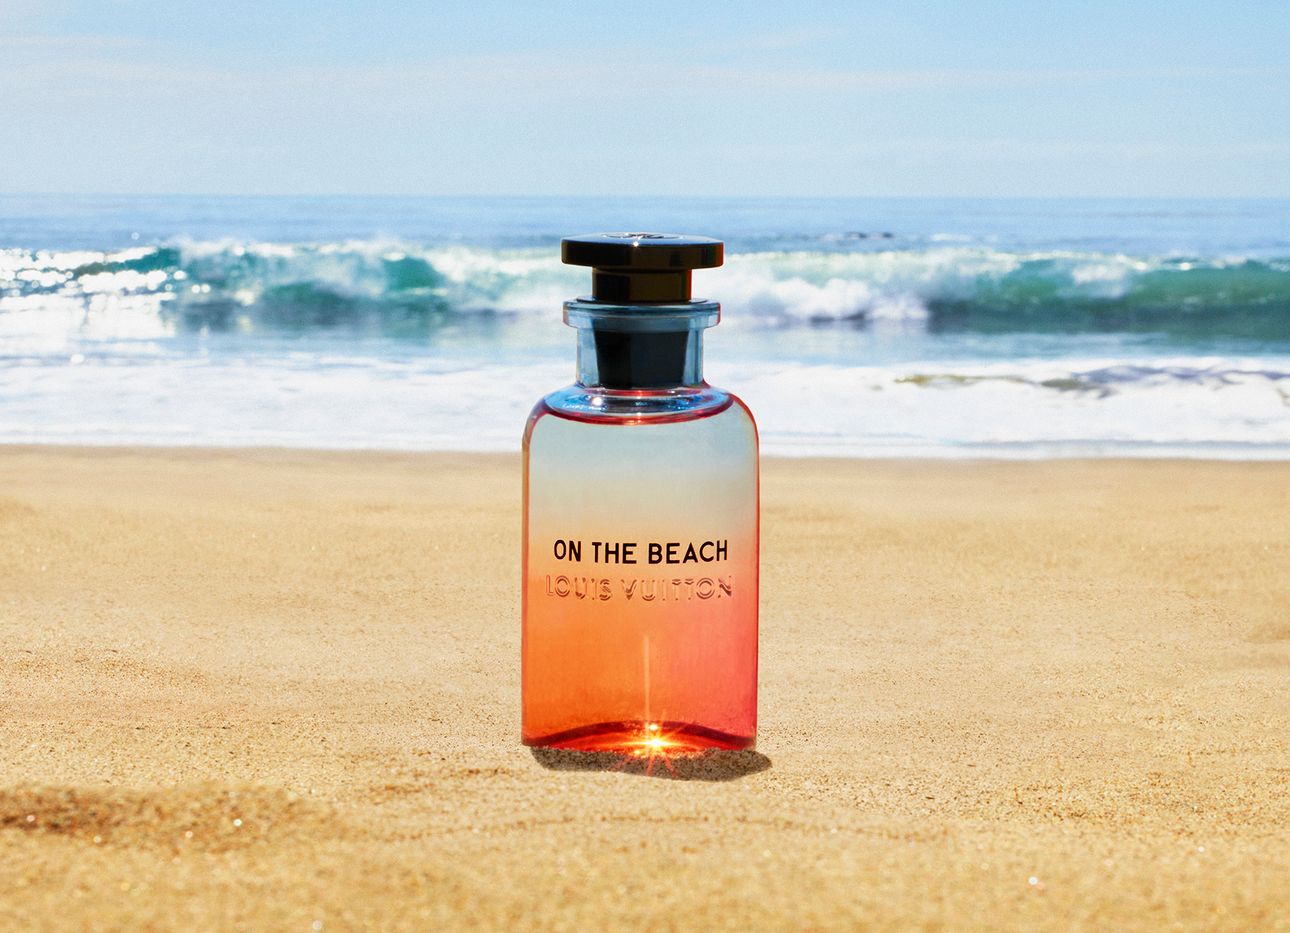 How Louis Vuitton Bottles the Scent of California's Shoreline